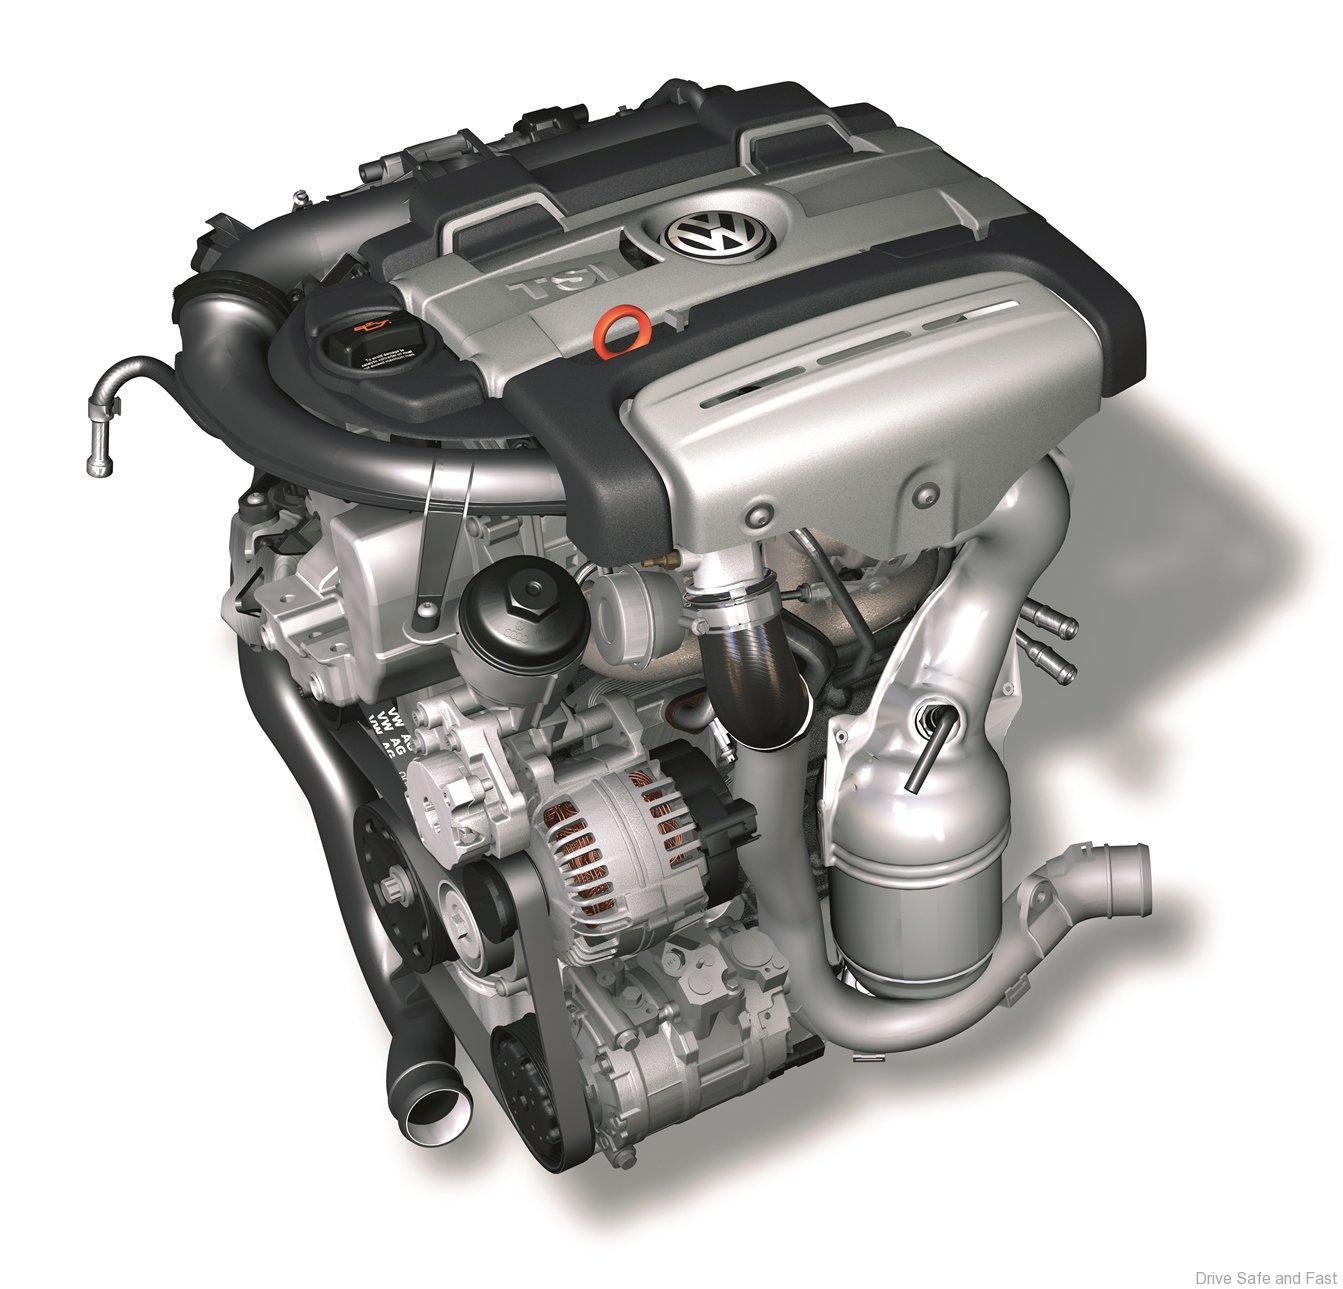 Мотор 150 лс. Мотор 1.4 TSI 150 Л.С. Двигатель Volkswagen 1,4 TSI. Мотор CTHA 1.4 TSI. Двигатель Volkswagen Tiguan 1.4 TSI.